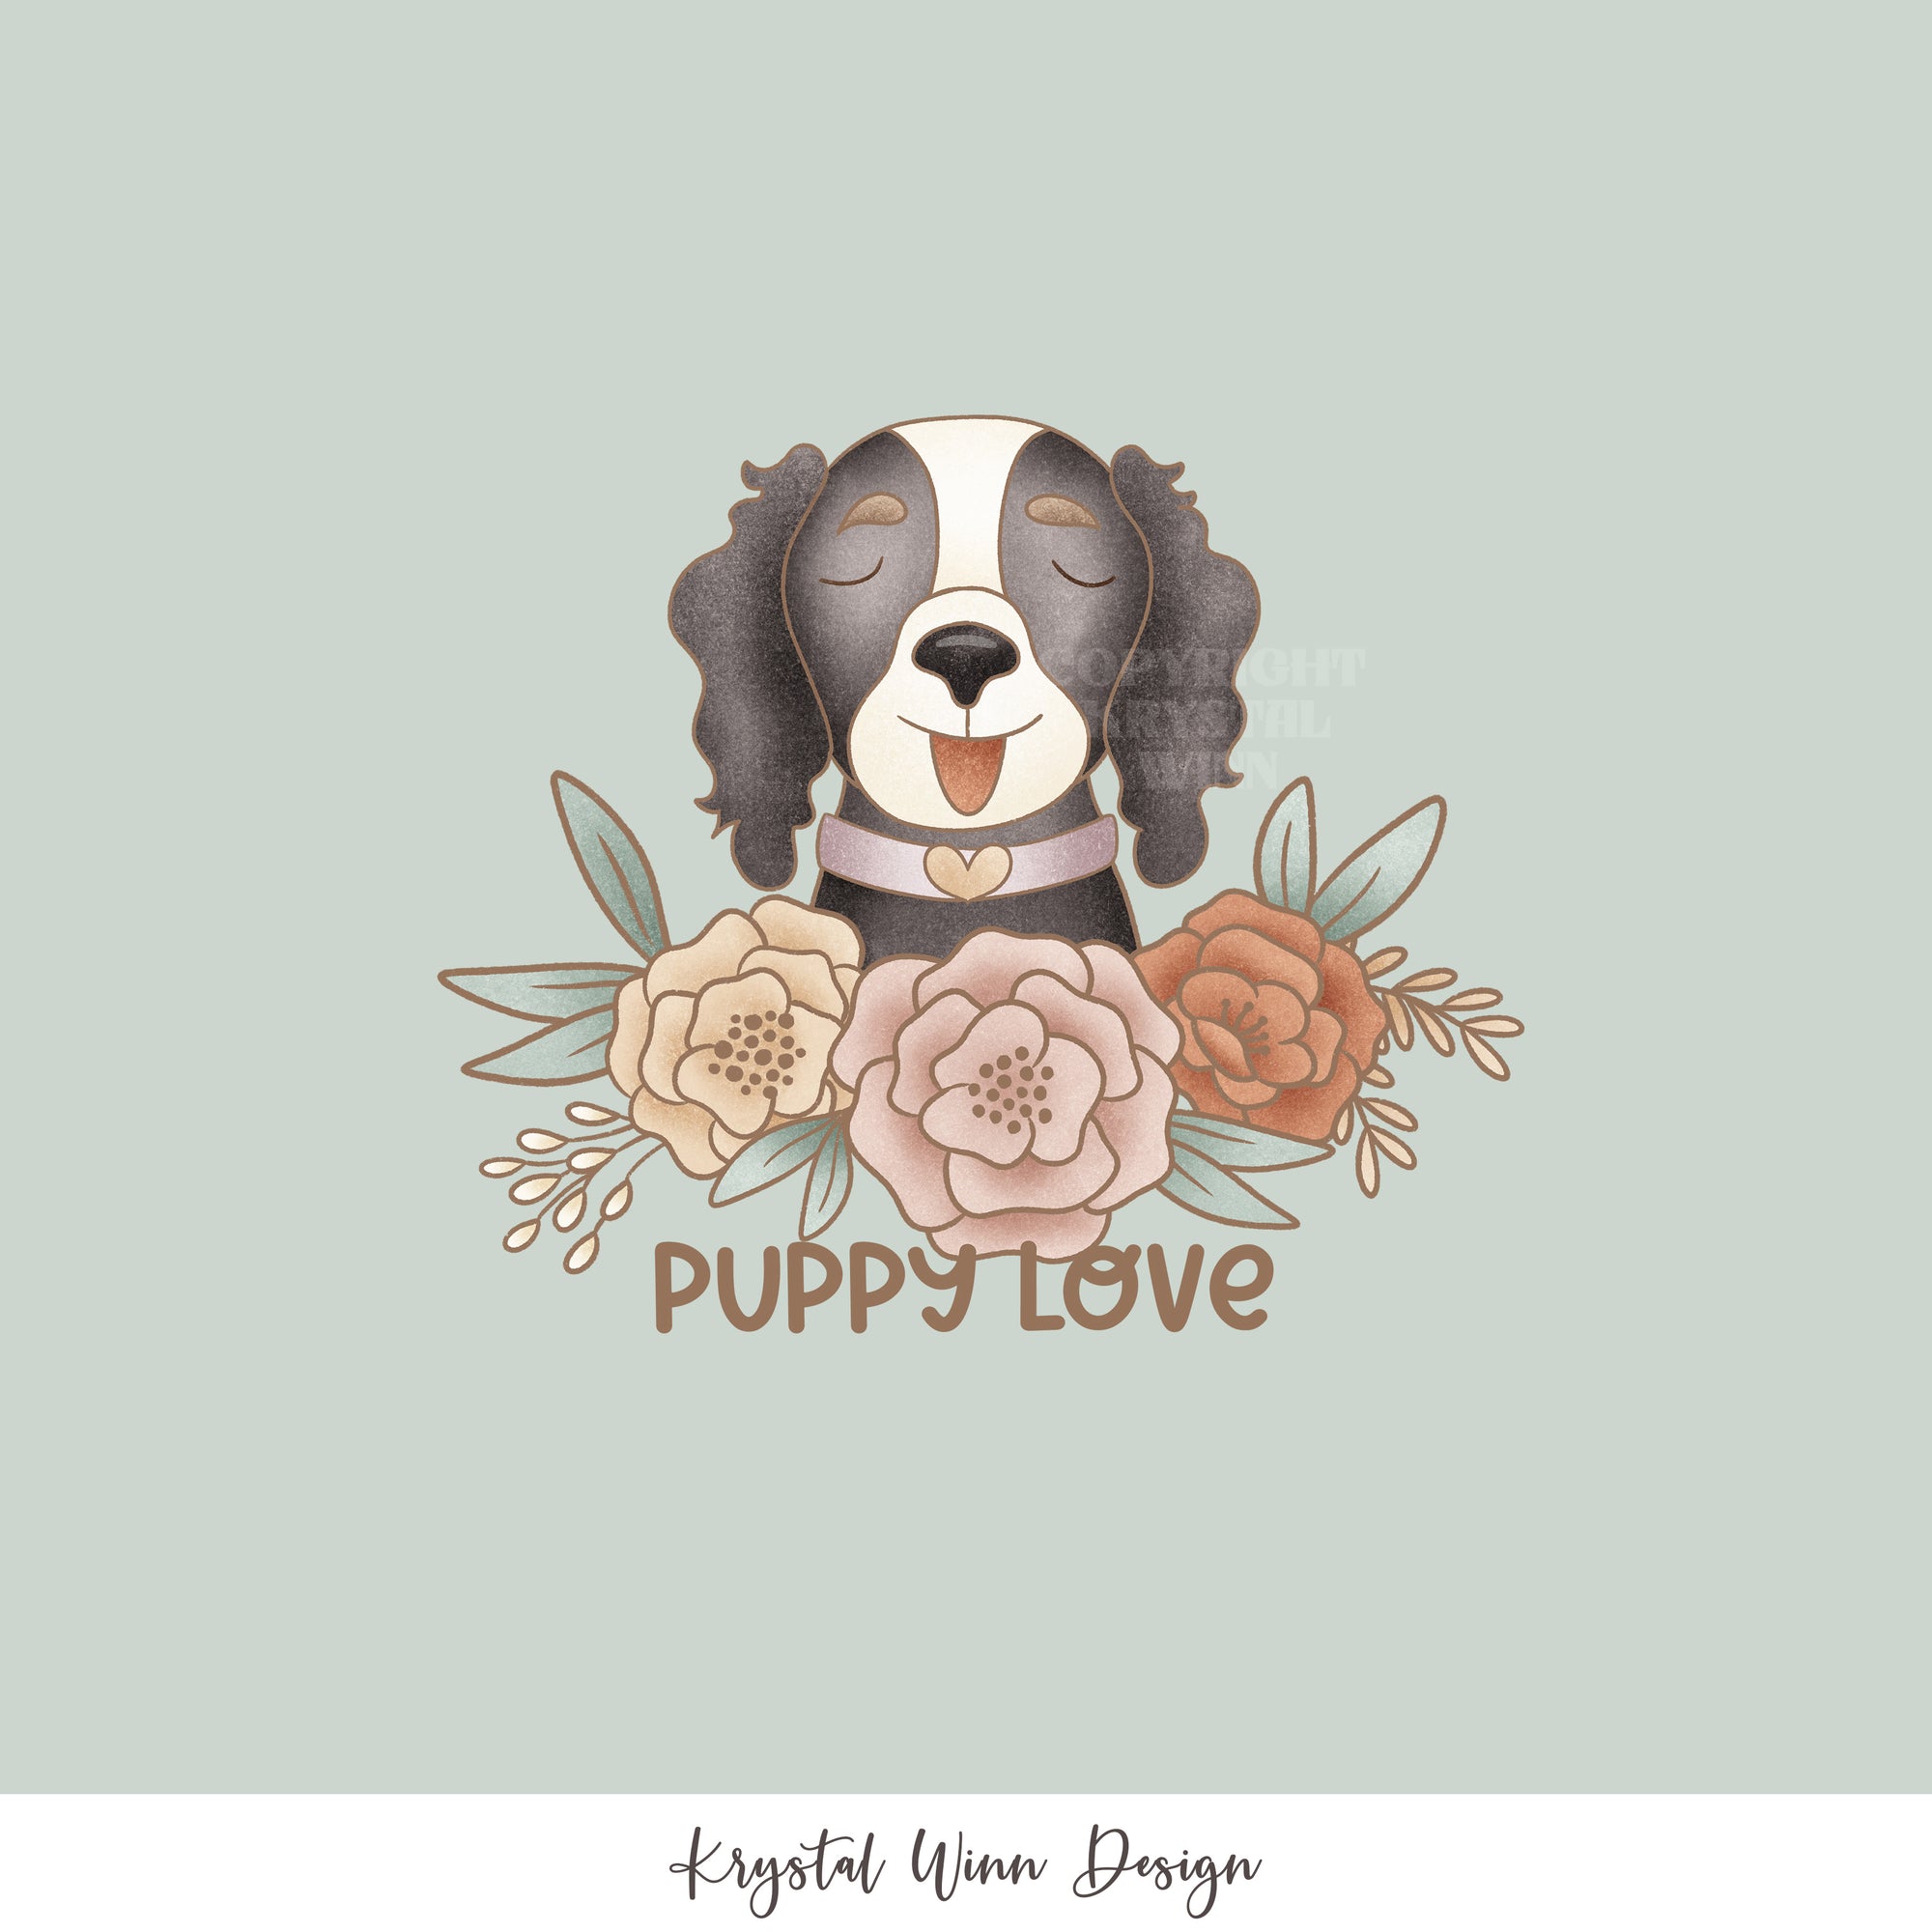 Puppy love panel